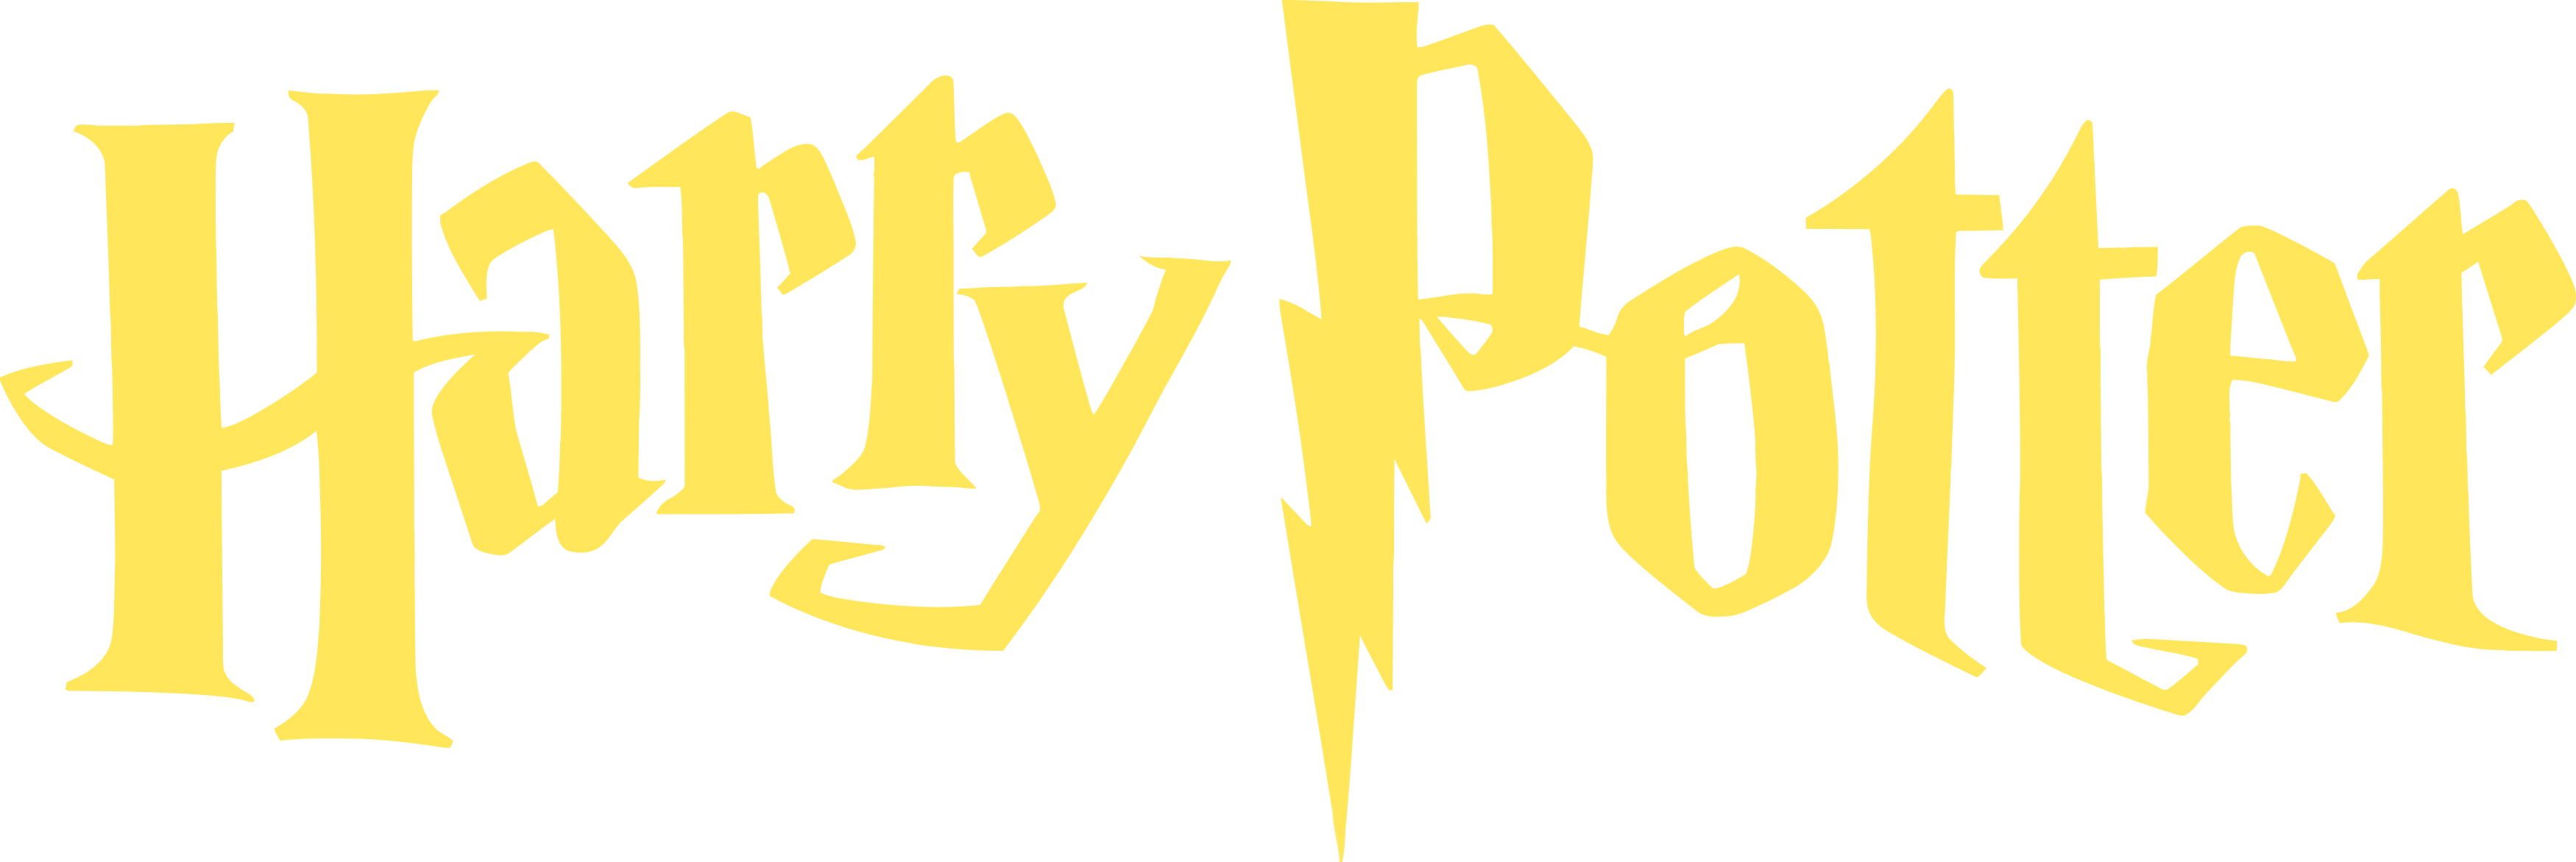 Harry Potter Logo.